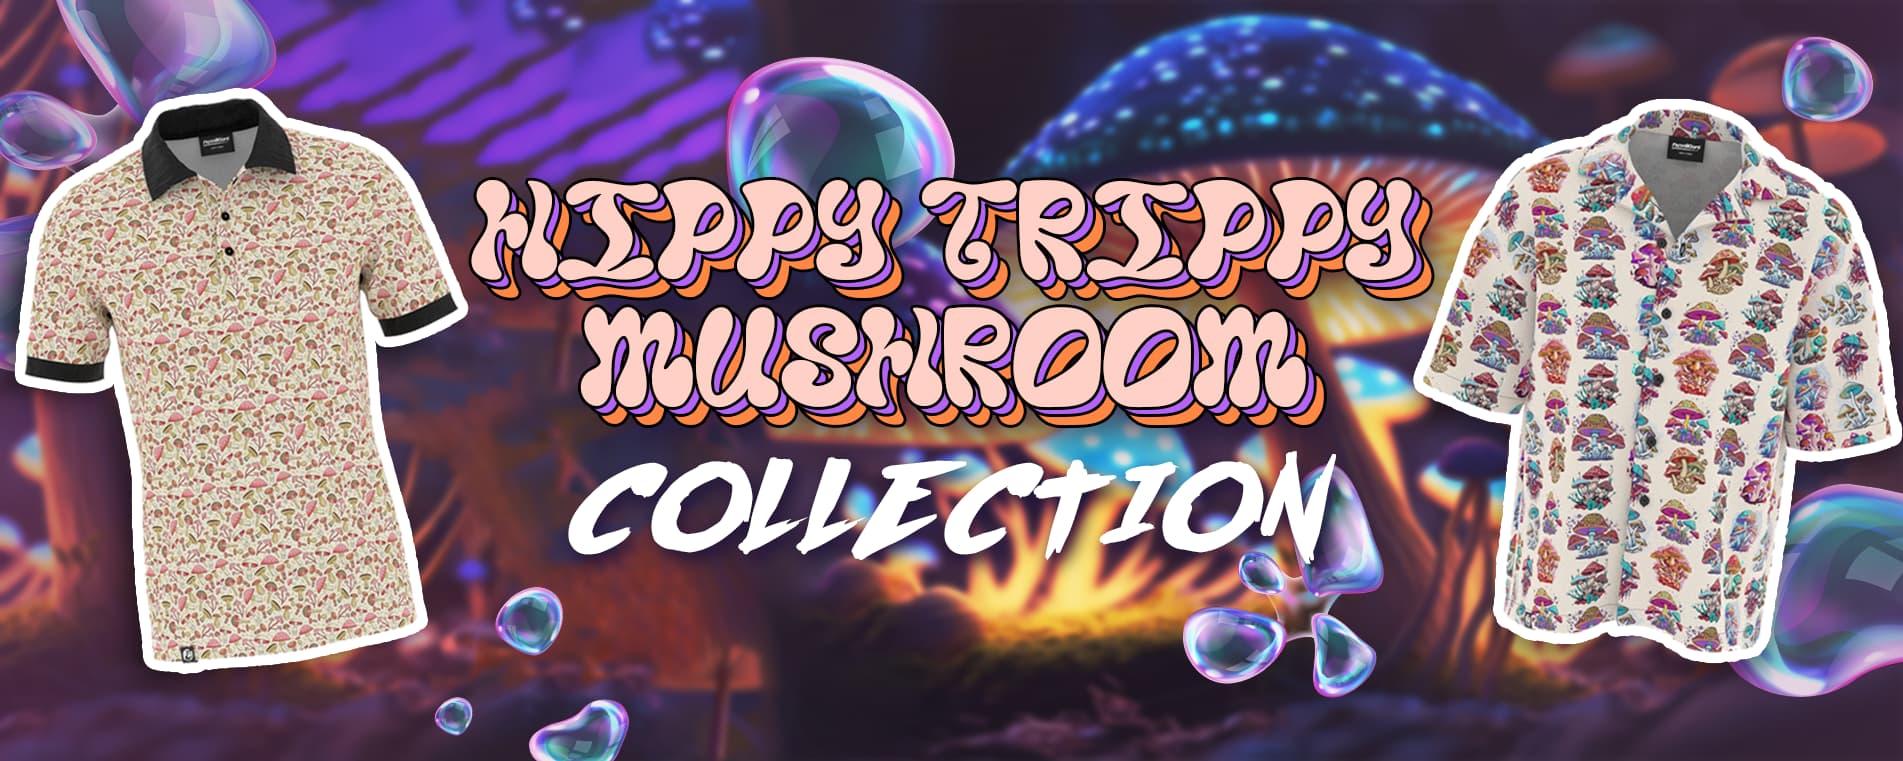 Hippy Trippy Mushroom